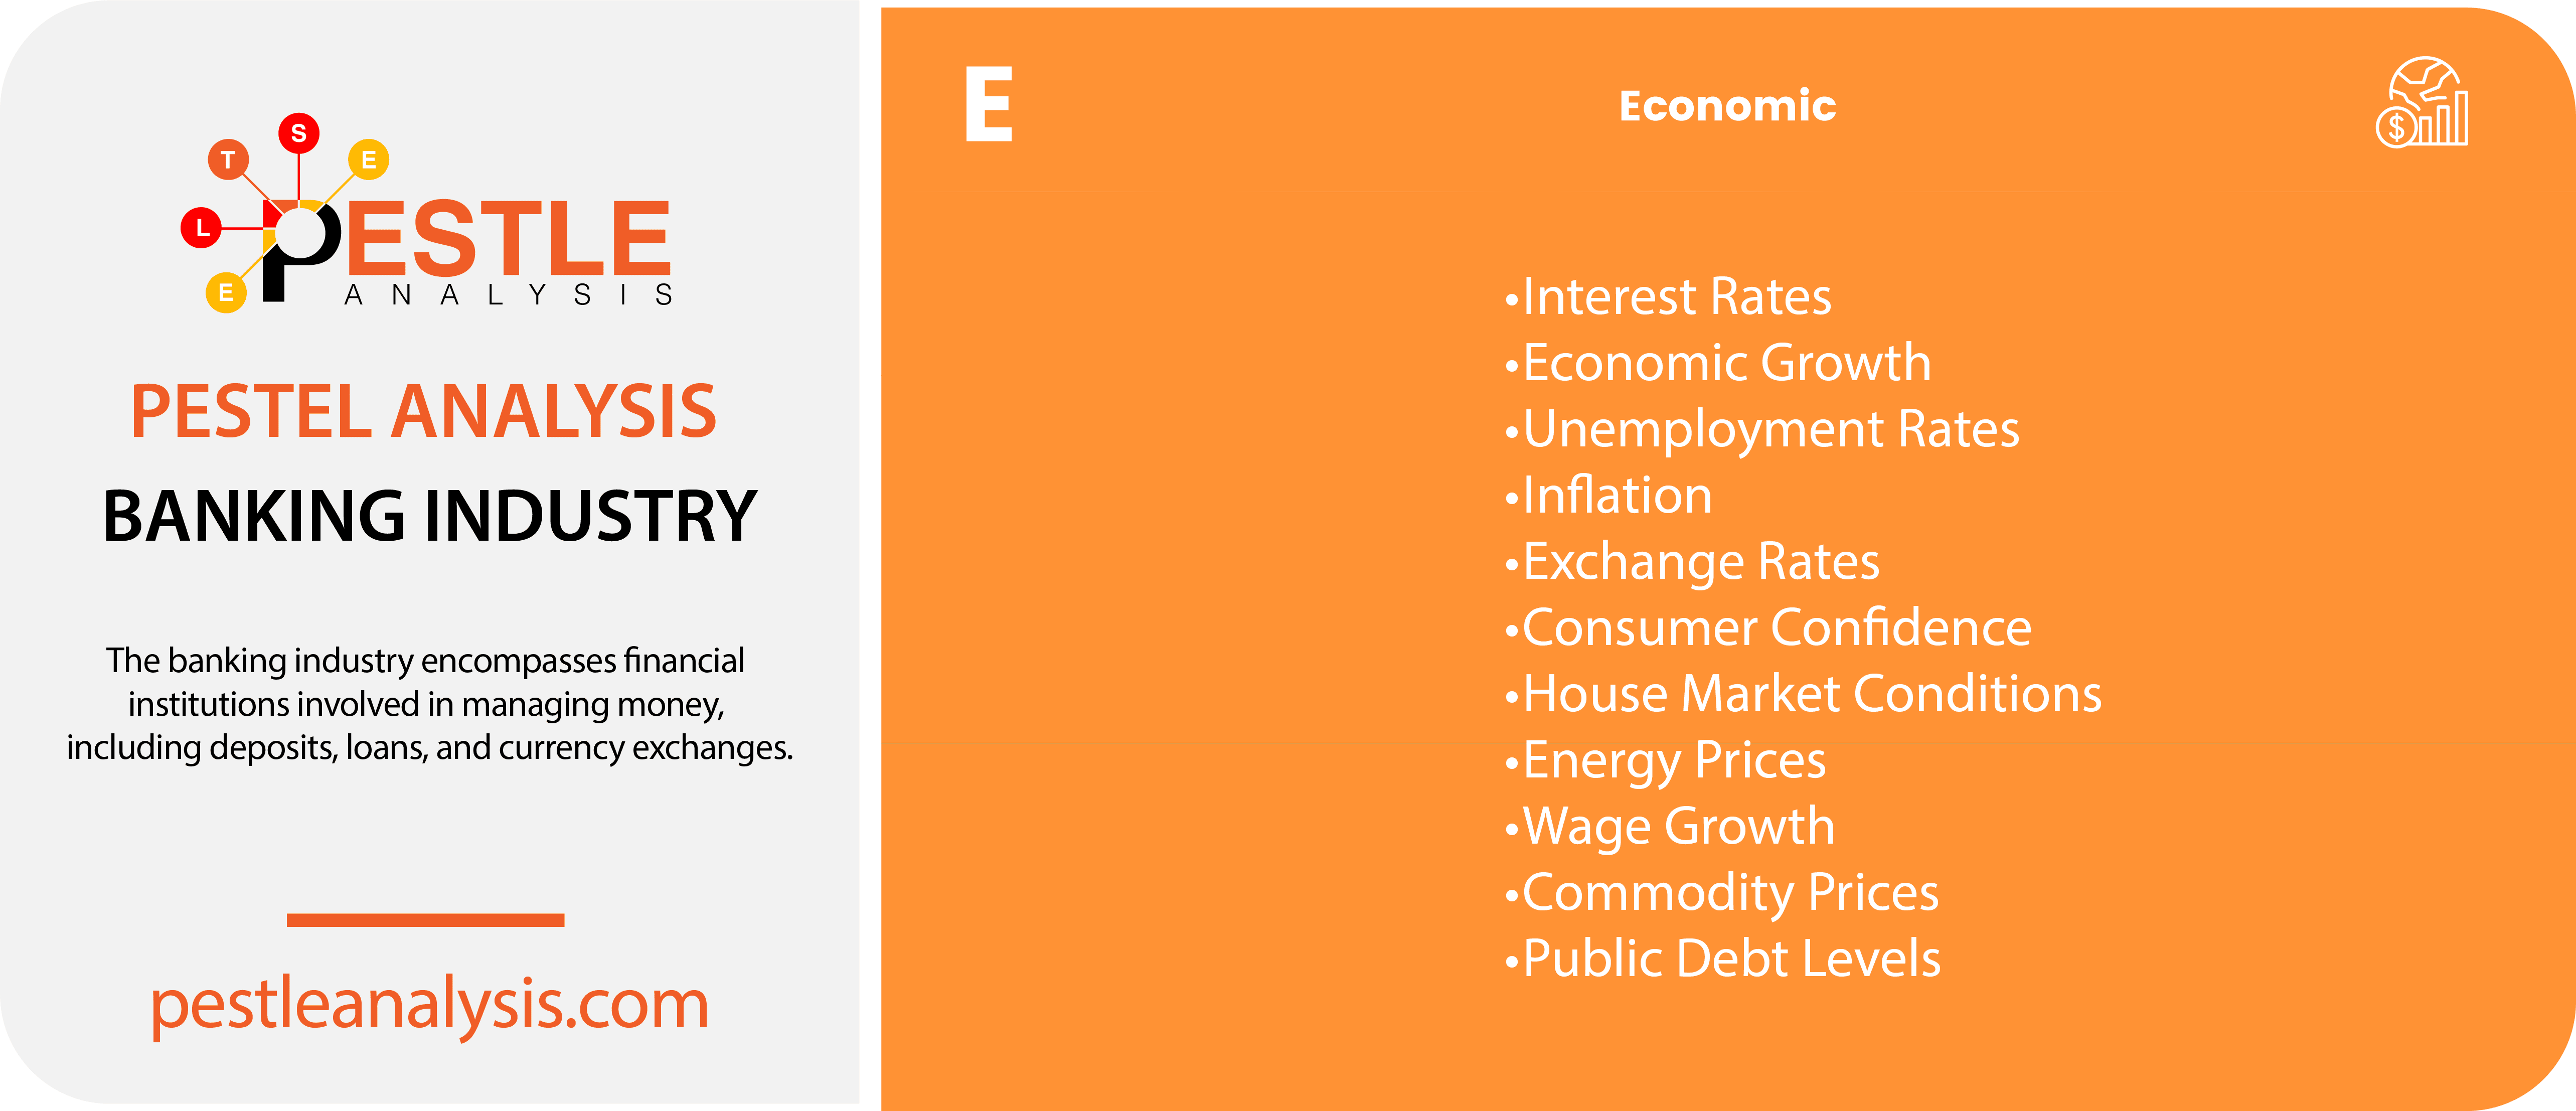 banking-industry-pestle-analysis-economic-factors-template